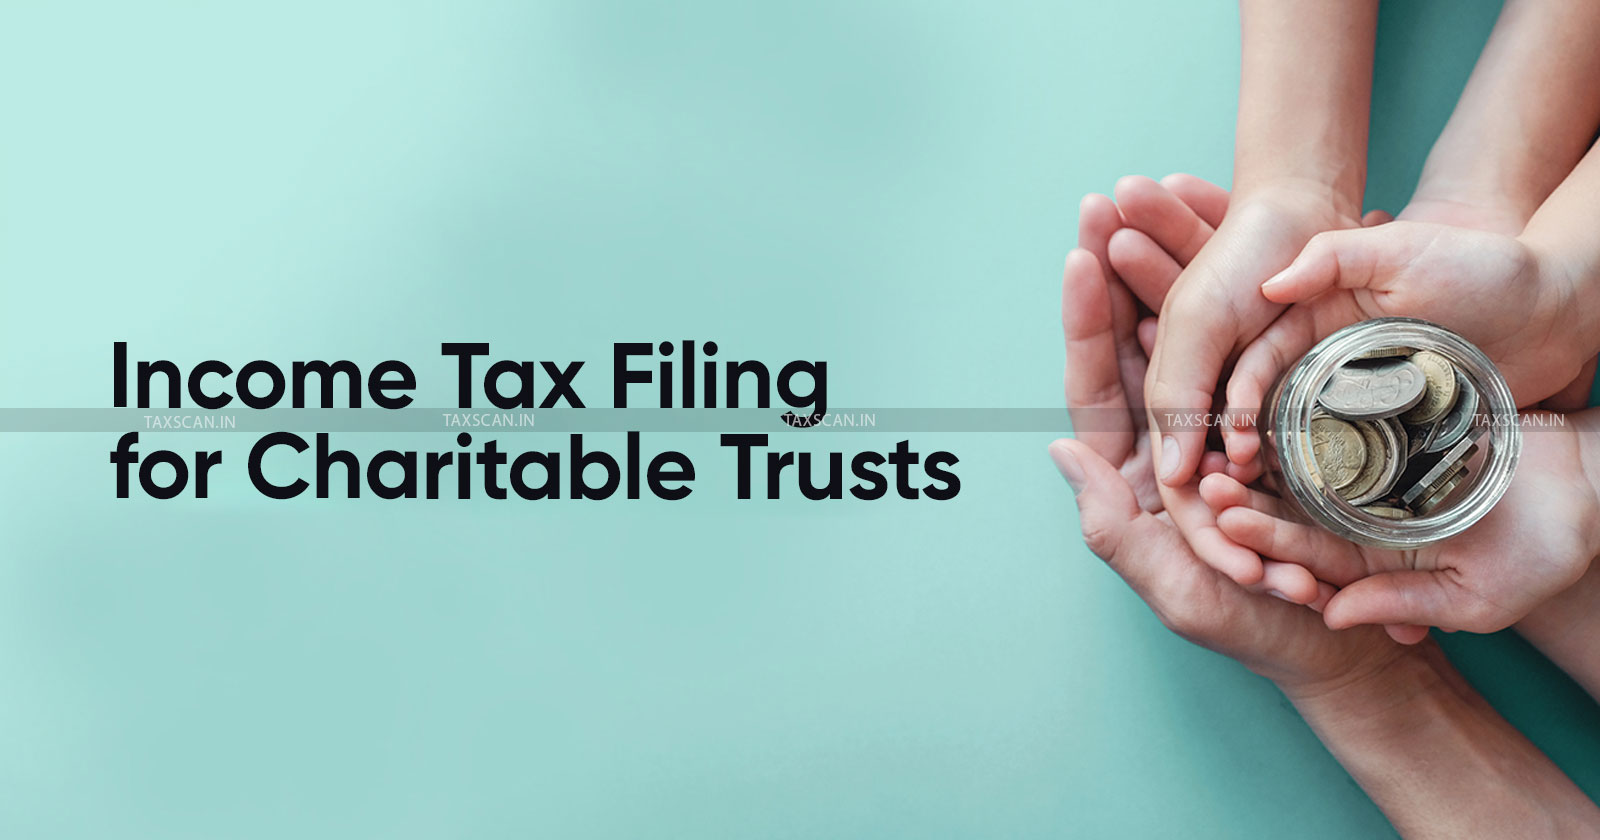 Charitable trust income tax - income tax - Charitable trust taxation - Tax benefits for charitable trusts - taxscan